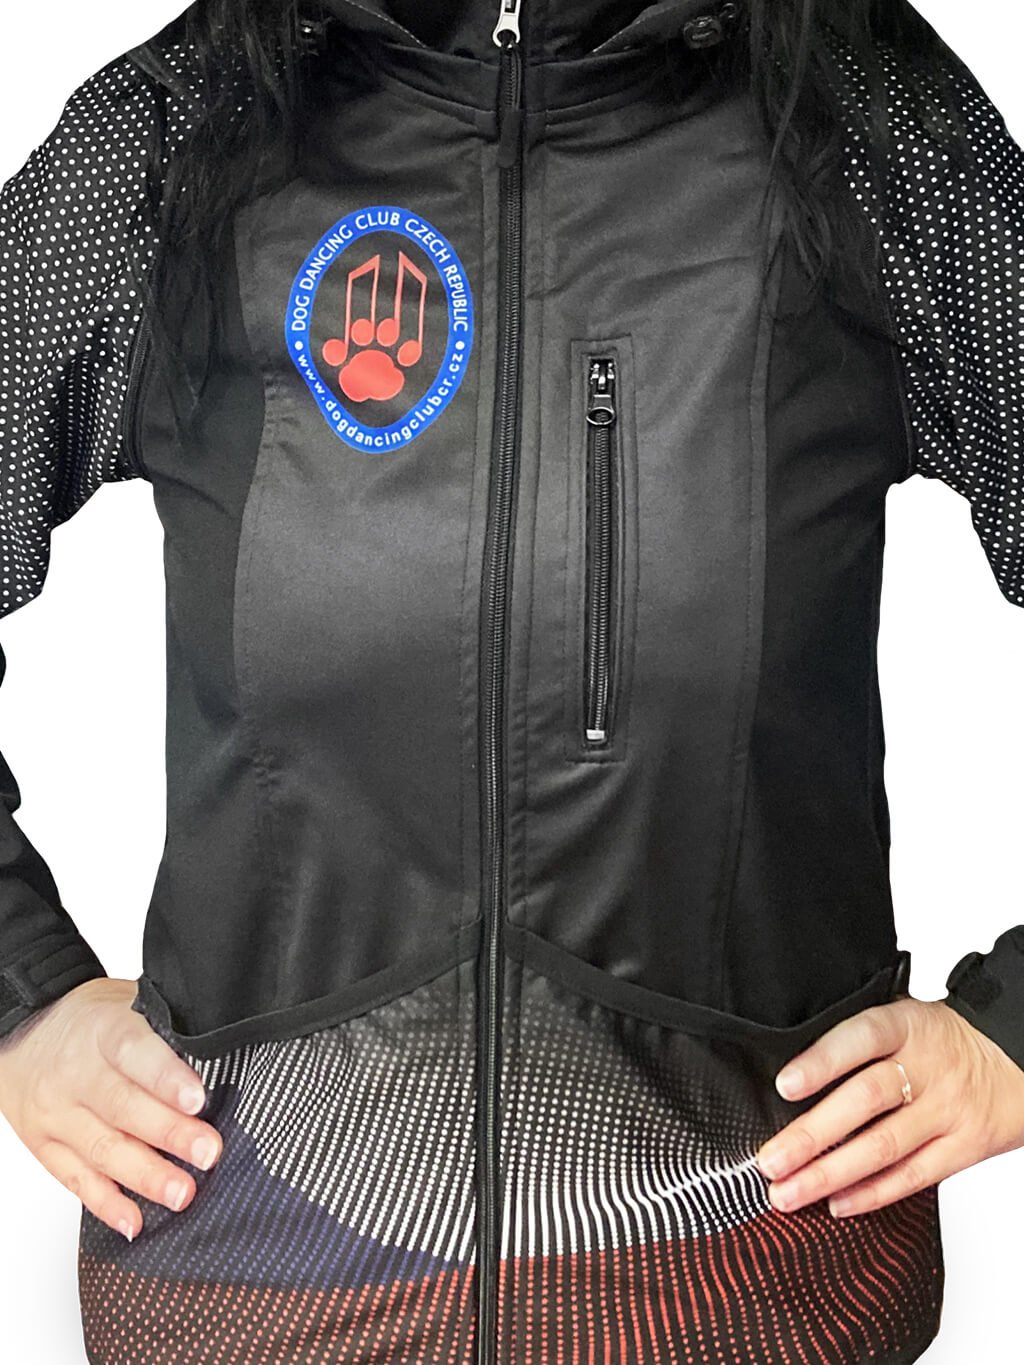 Women's training jacket 2 in 1 - customized